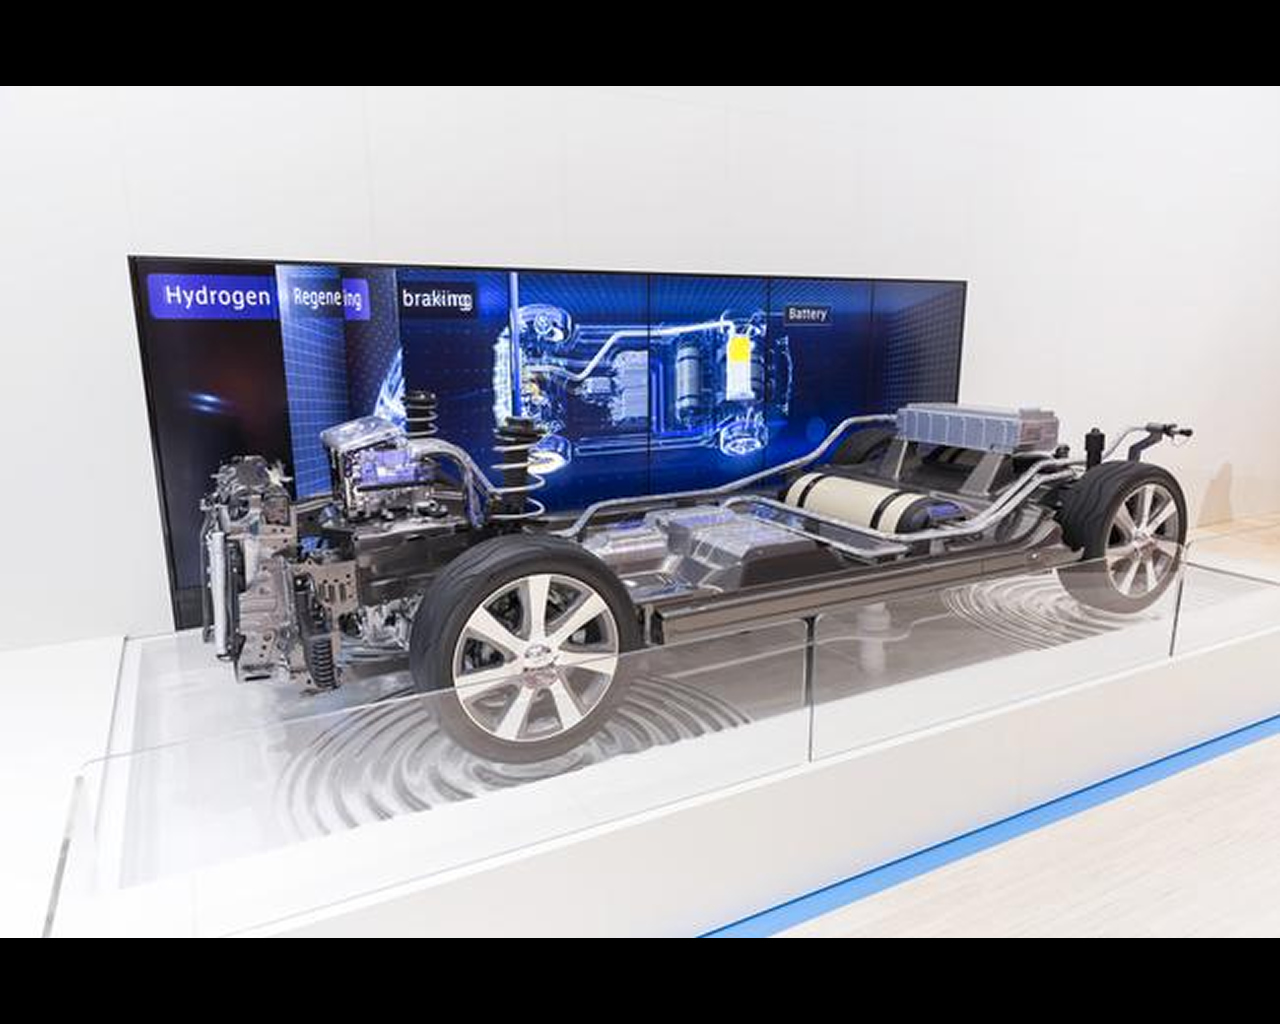 Toyota hydrogen electric vehicle